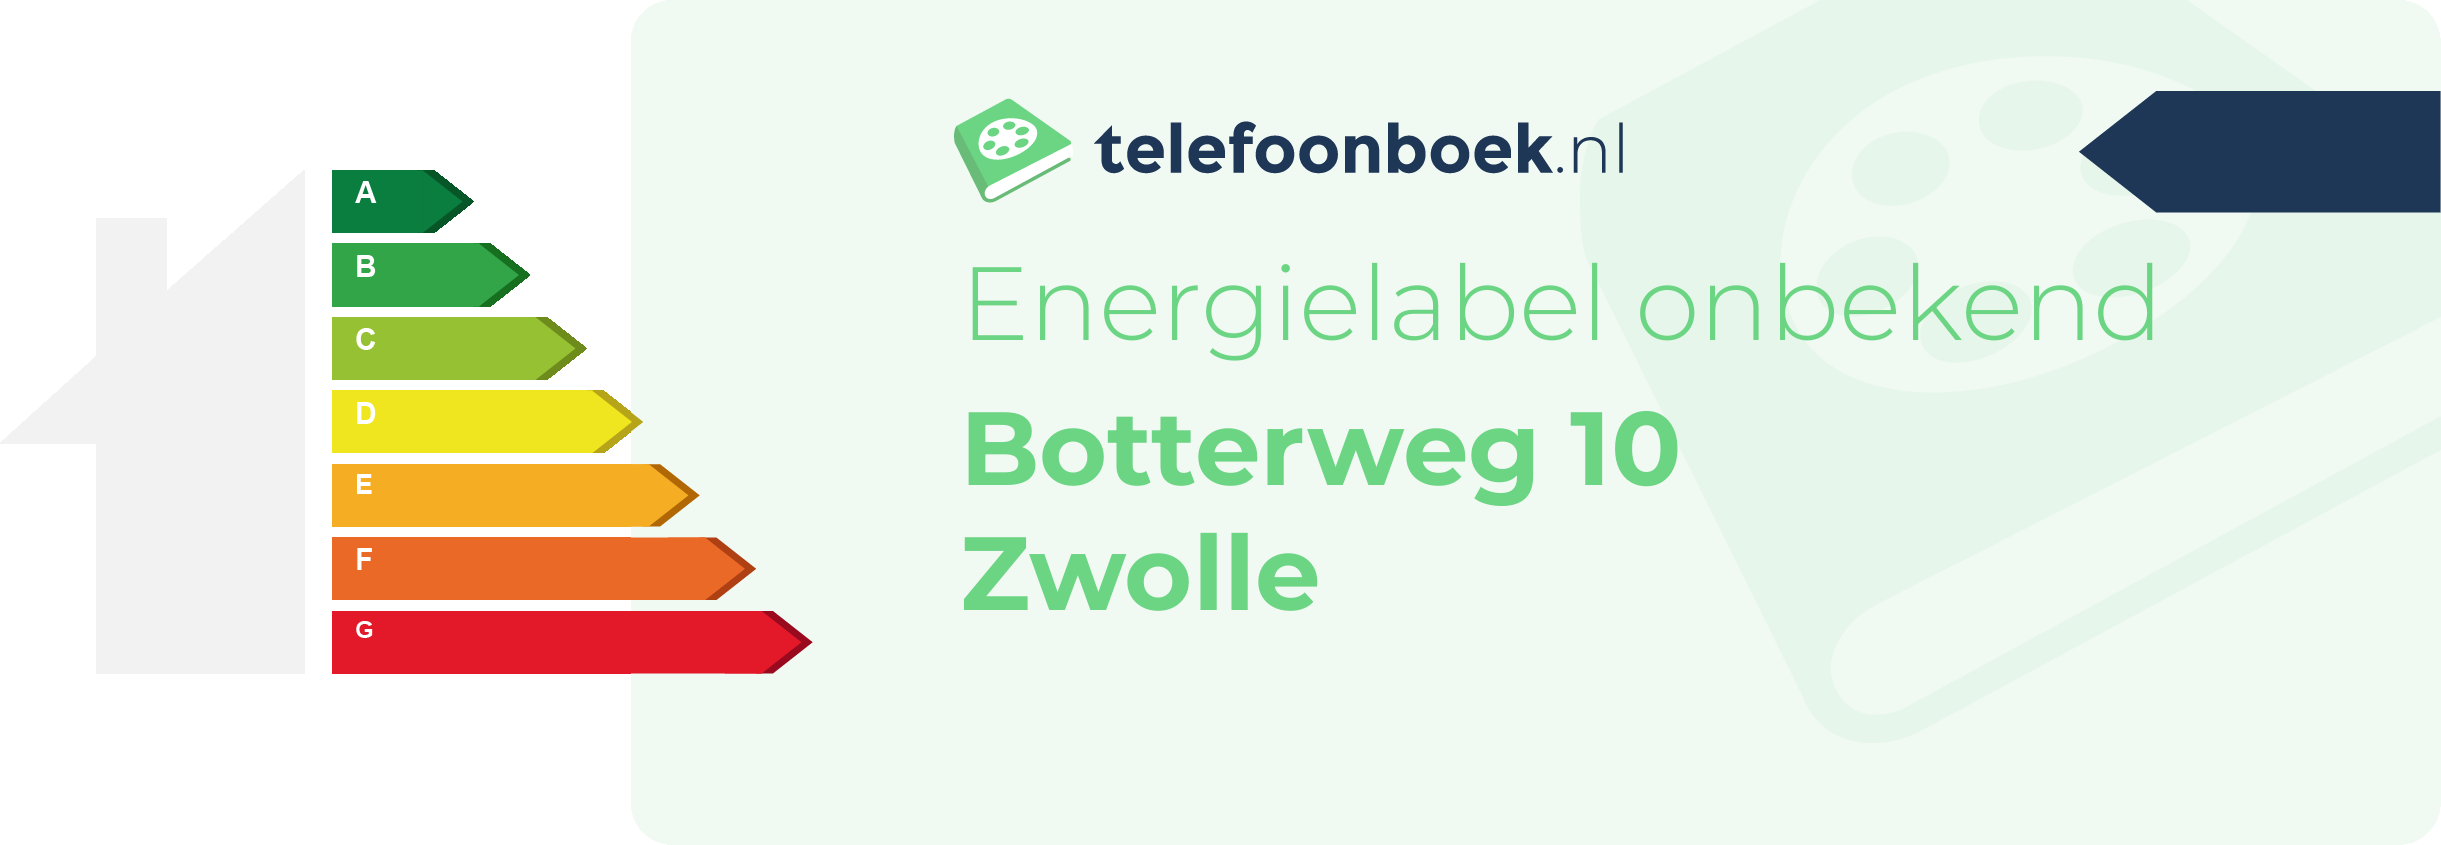 Energielabel Botterweg 10 Zwolle